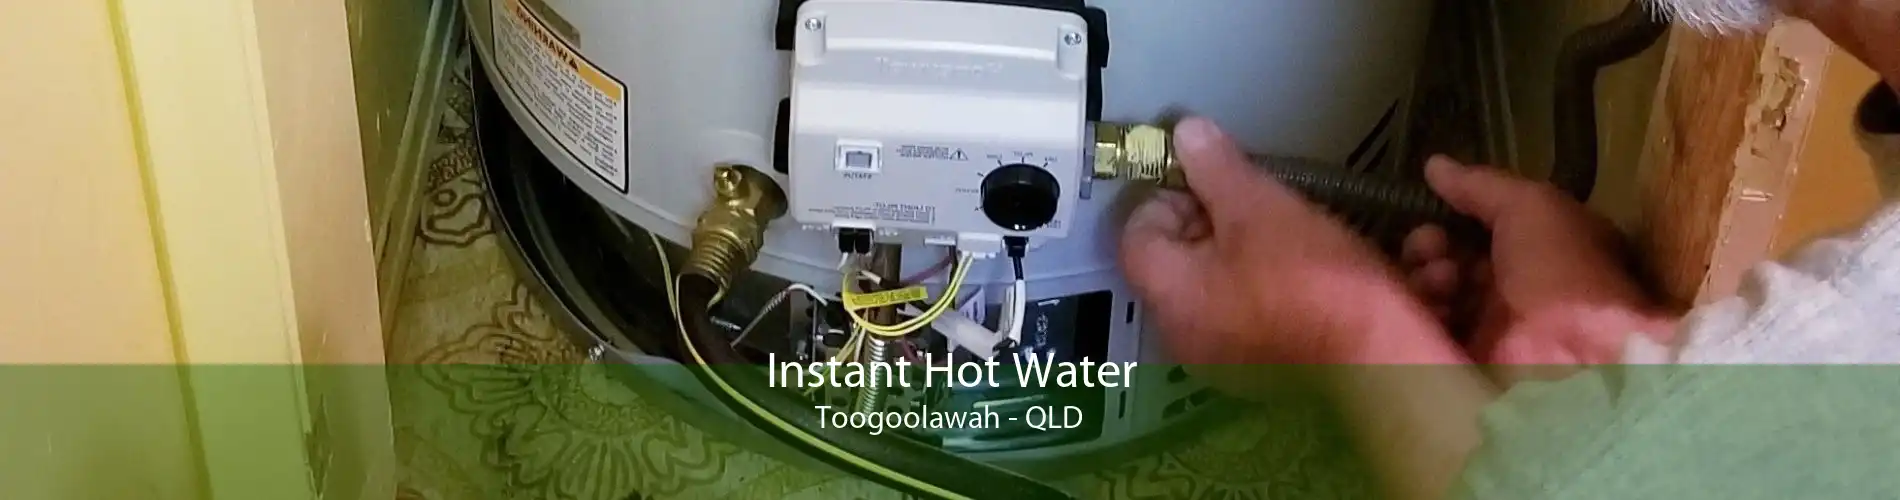 Instant Hot Water Toogoolawah - QLD